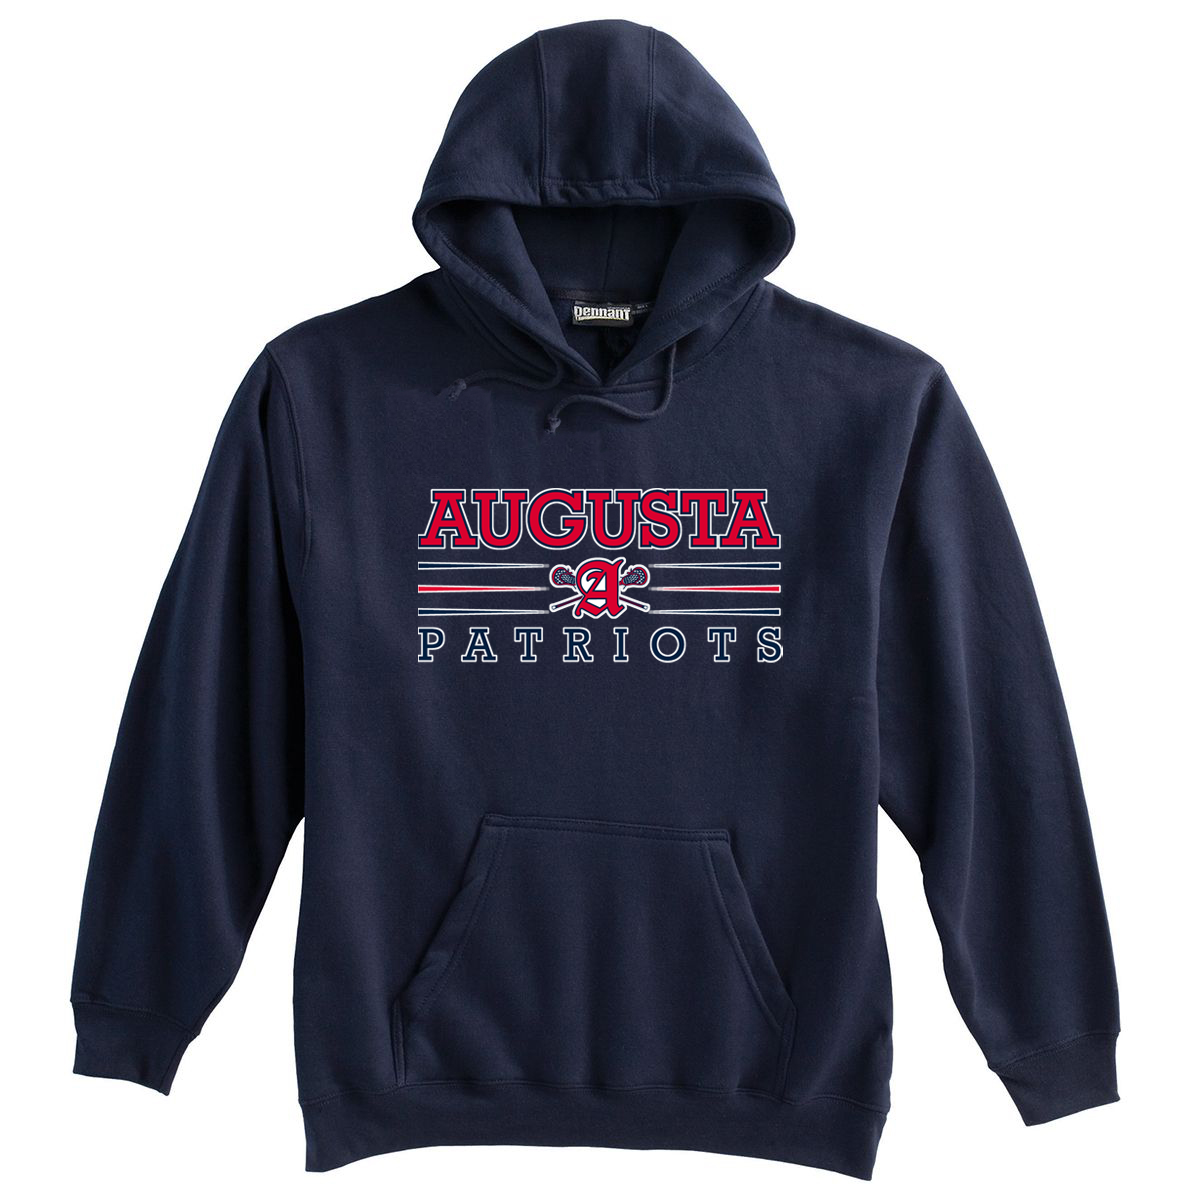 Augusta Patriots Navy Sweatshirt